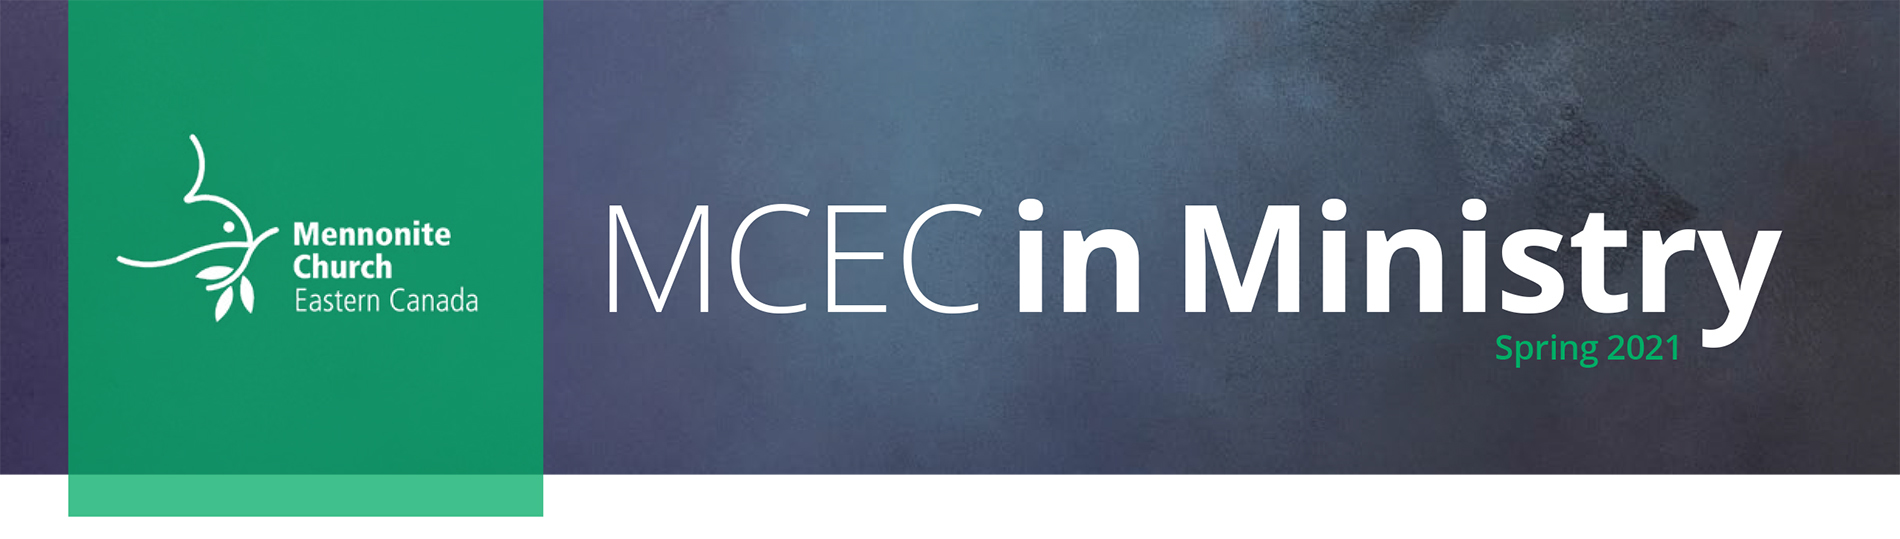 MCEC in Ministry header